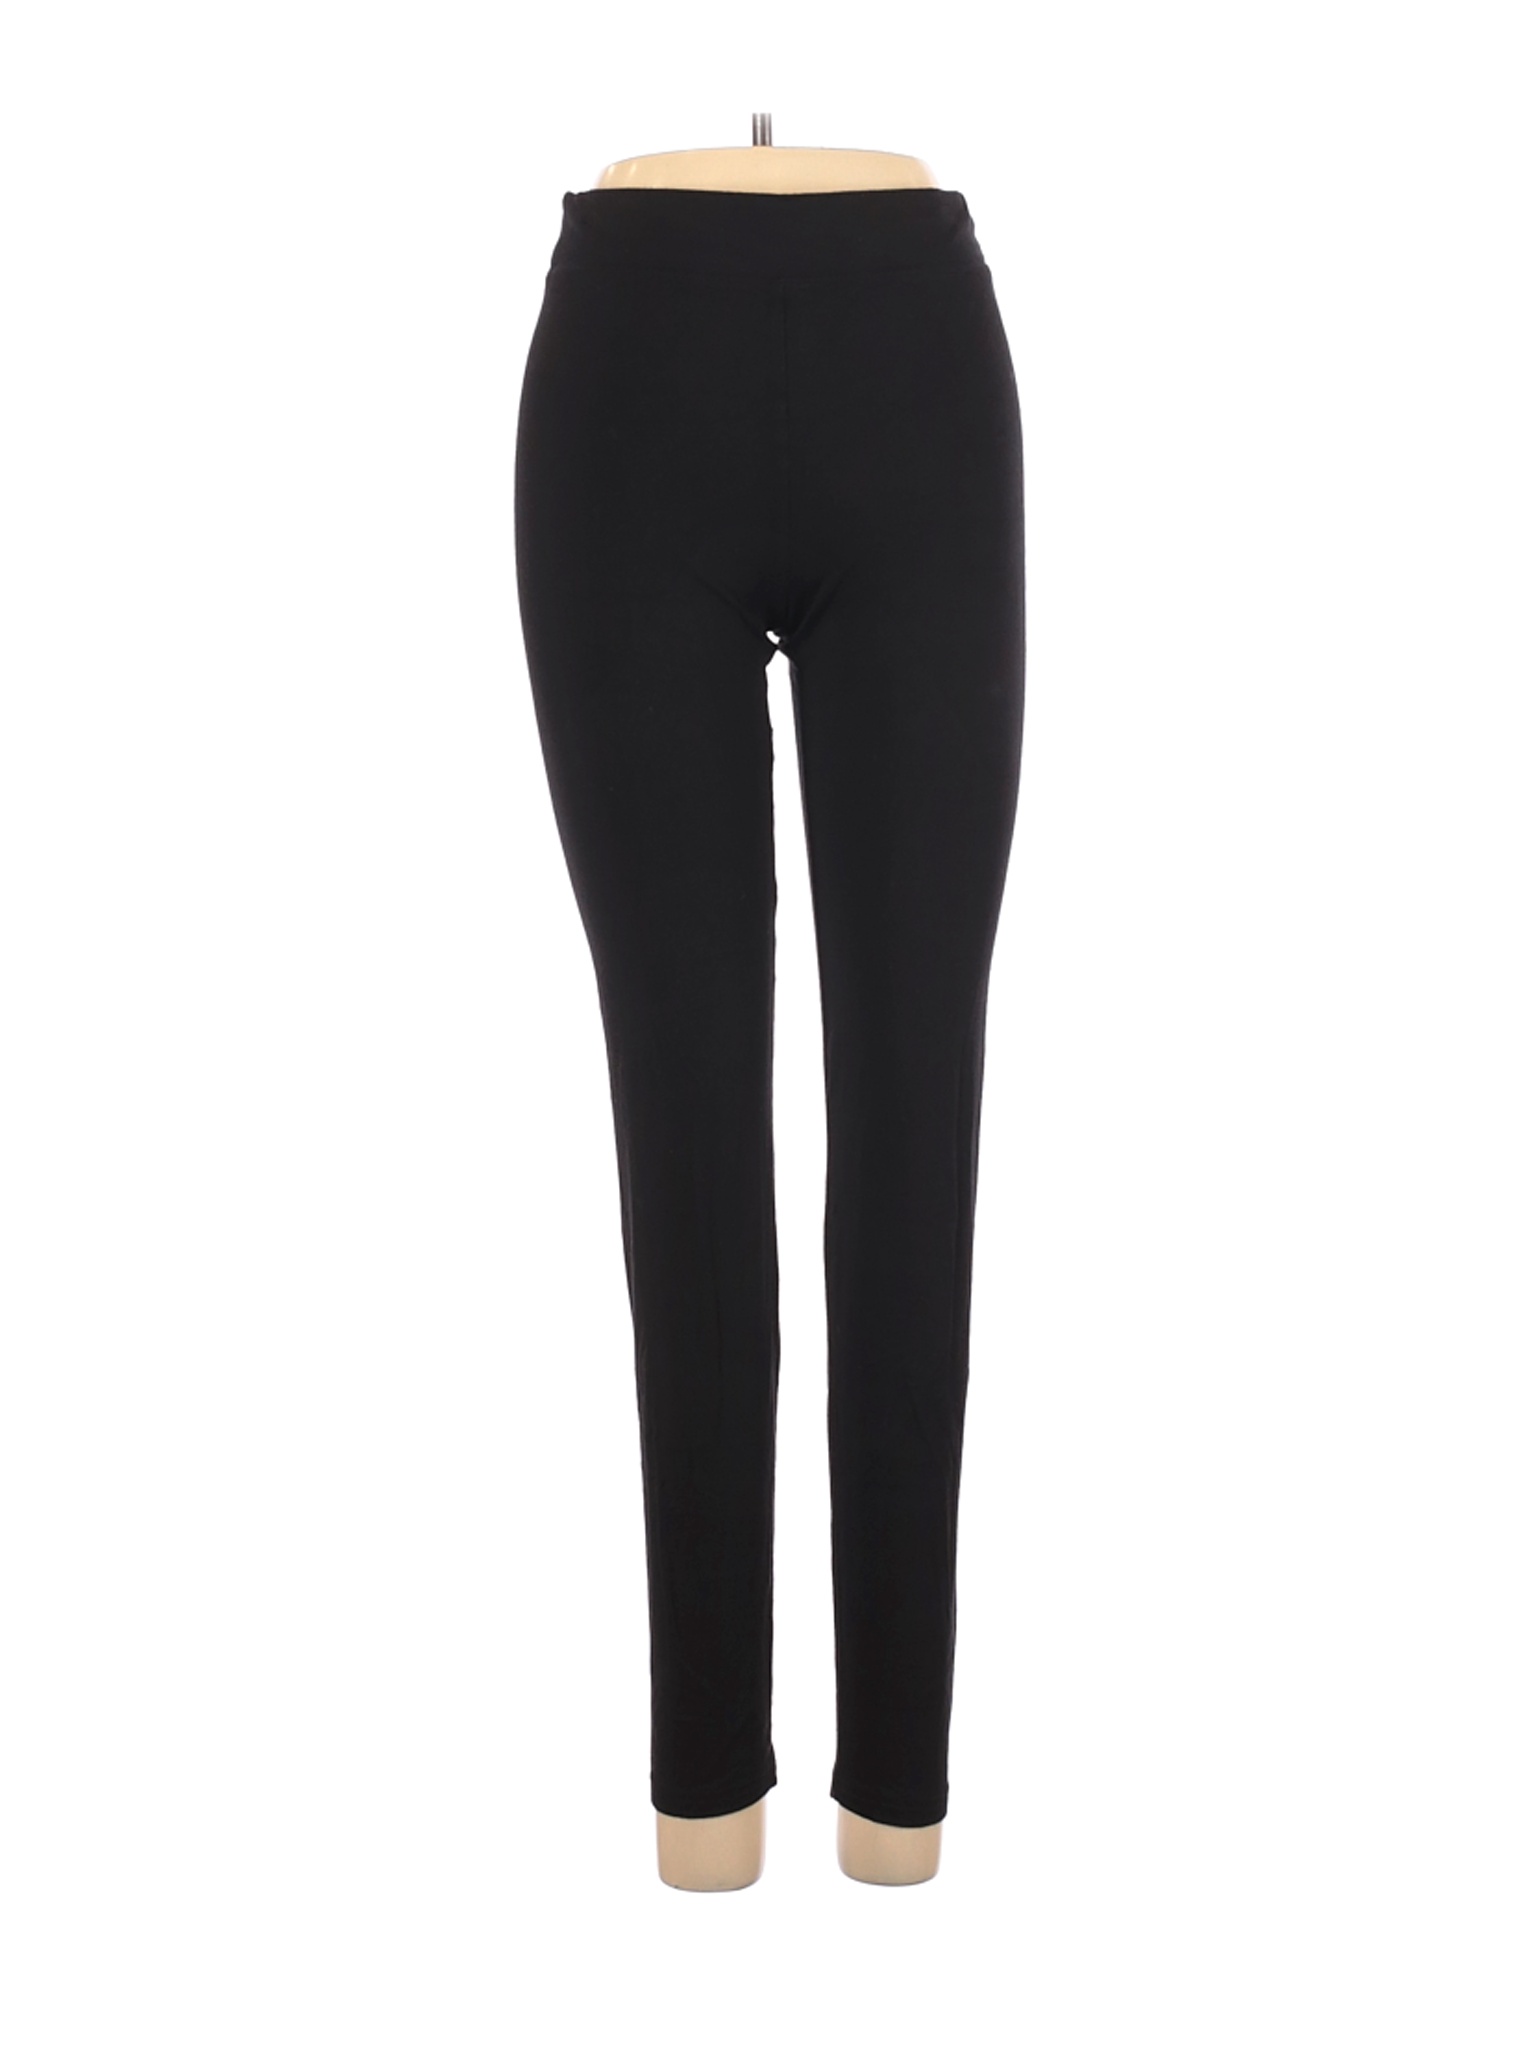 A New Day Women Black Casual Pants S | eBay